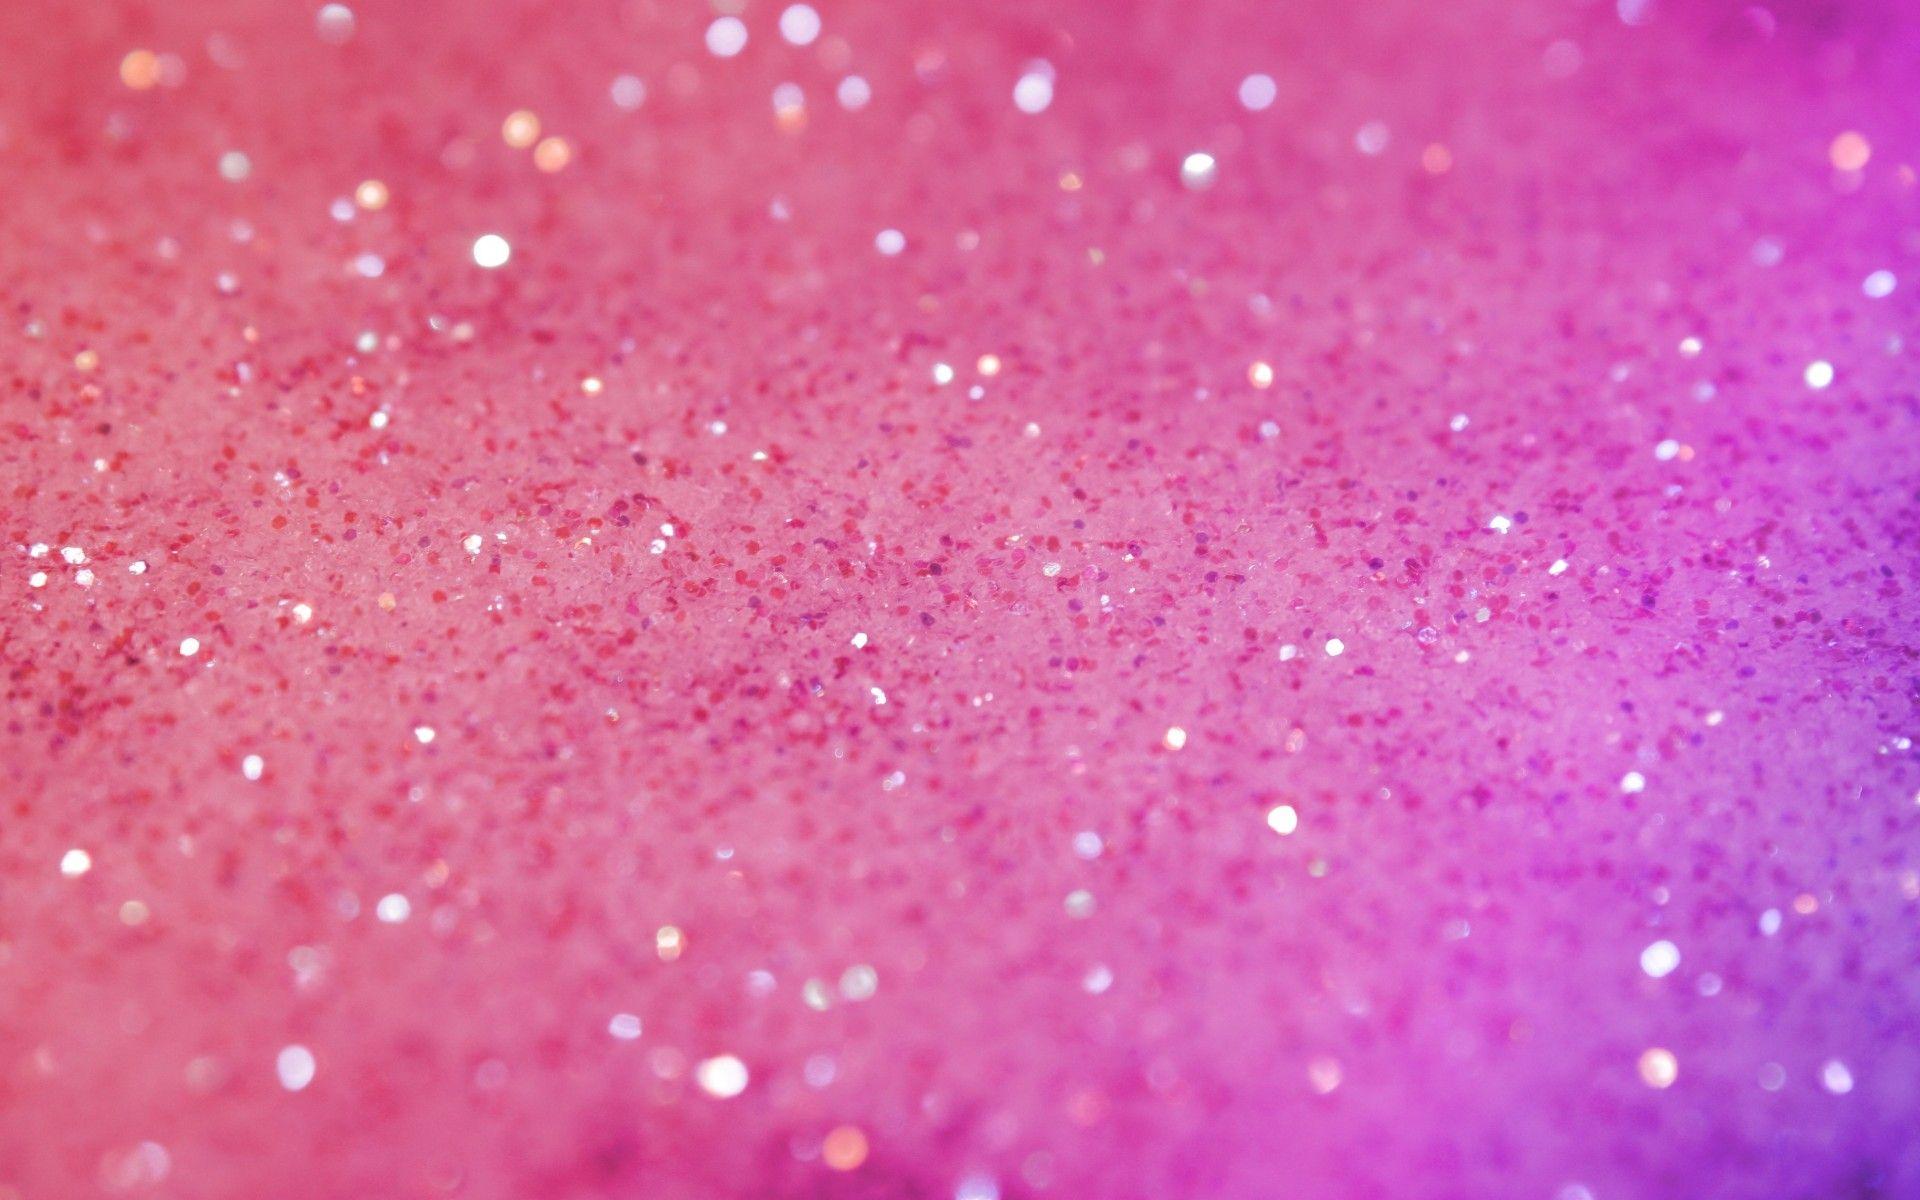 Iphone Wallpaper Pink  Free Aesthetic HD  4K Mobile Phone Images   rawpixel